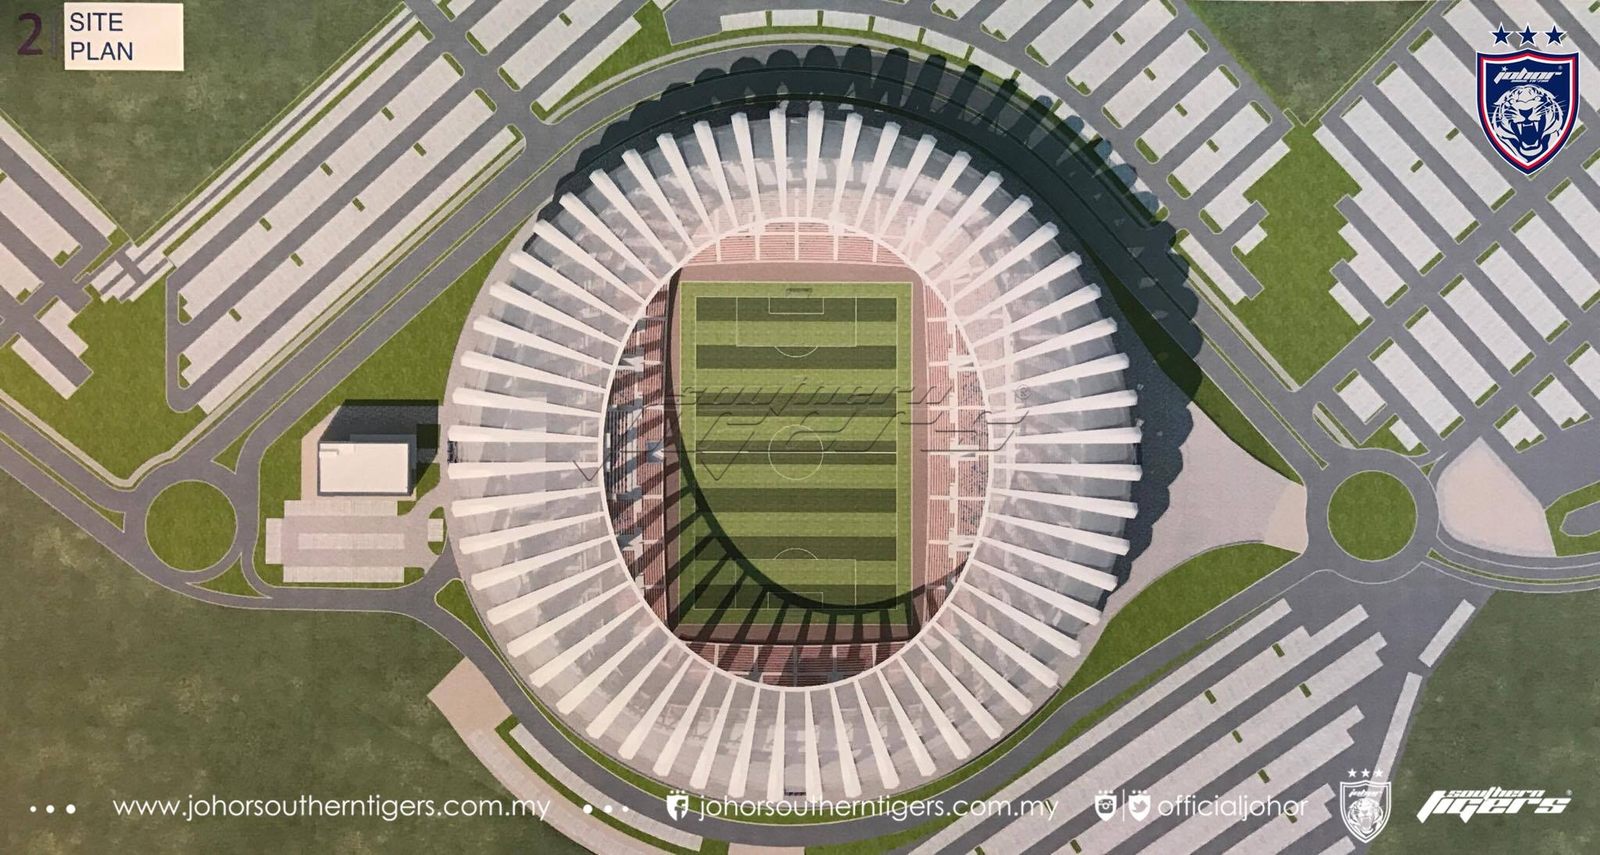 Design: Sultan Ibrahim Larkin Stadium – StadiumDB.com